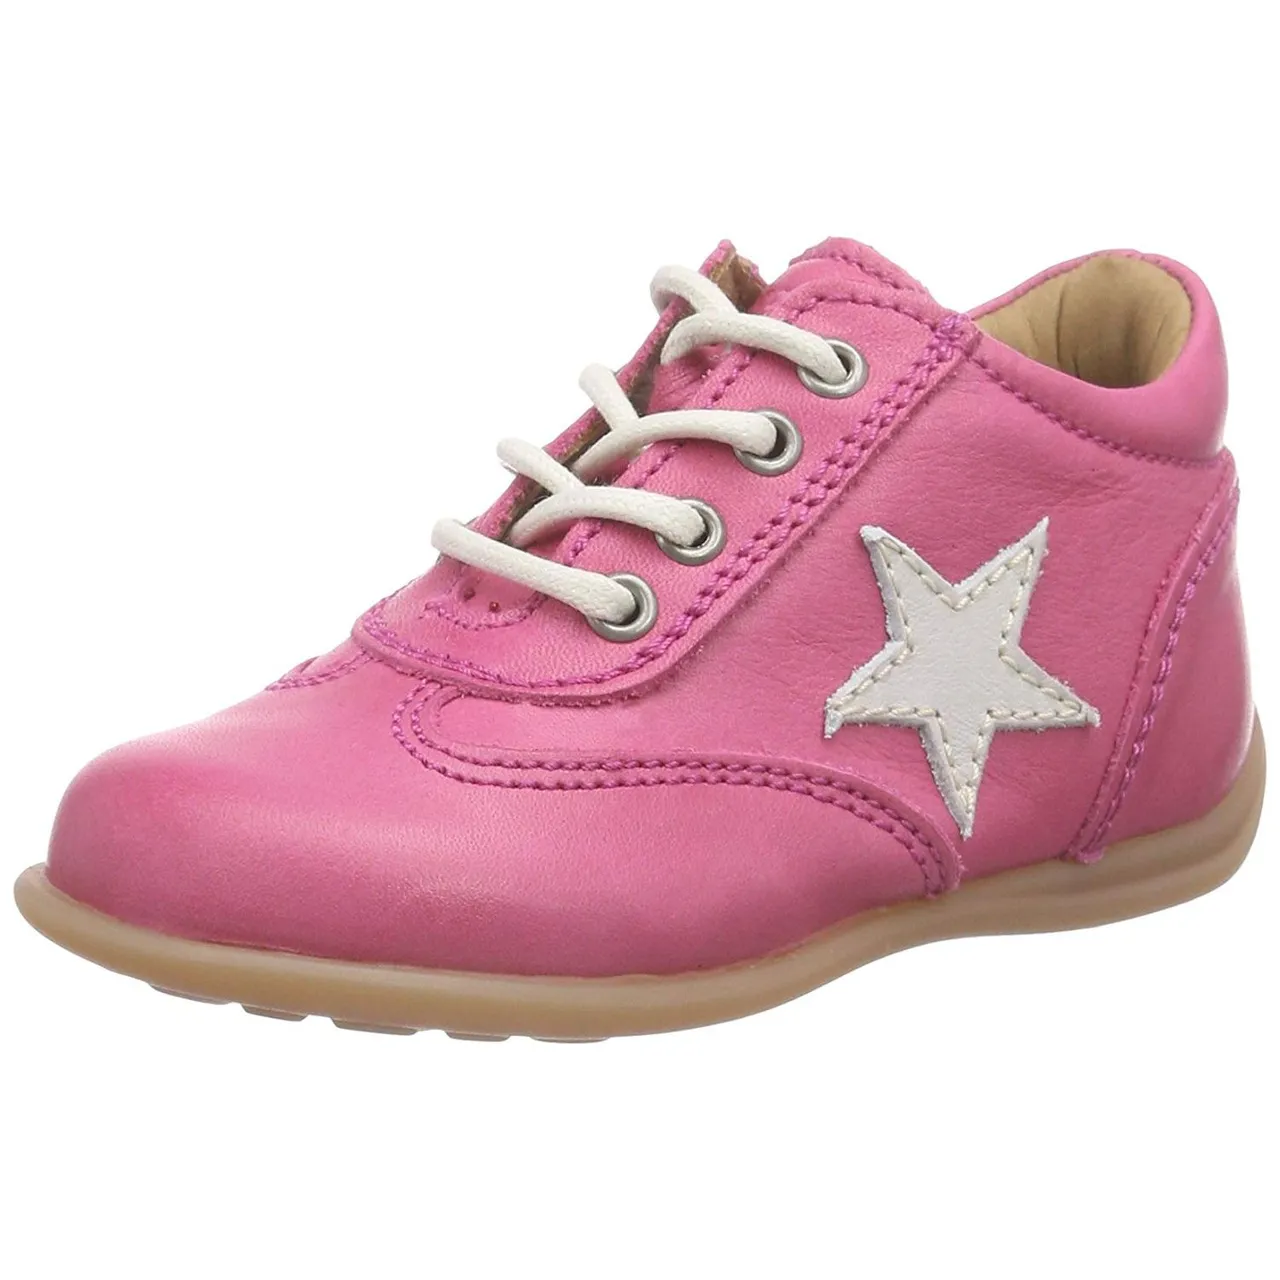 Mädchen Sneaker lila/pink Prewalker pink